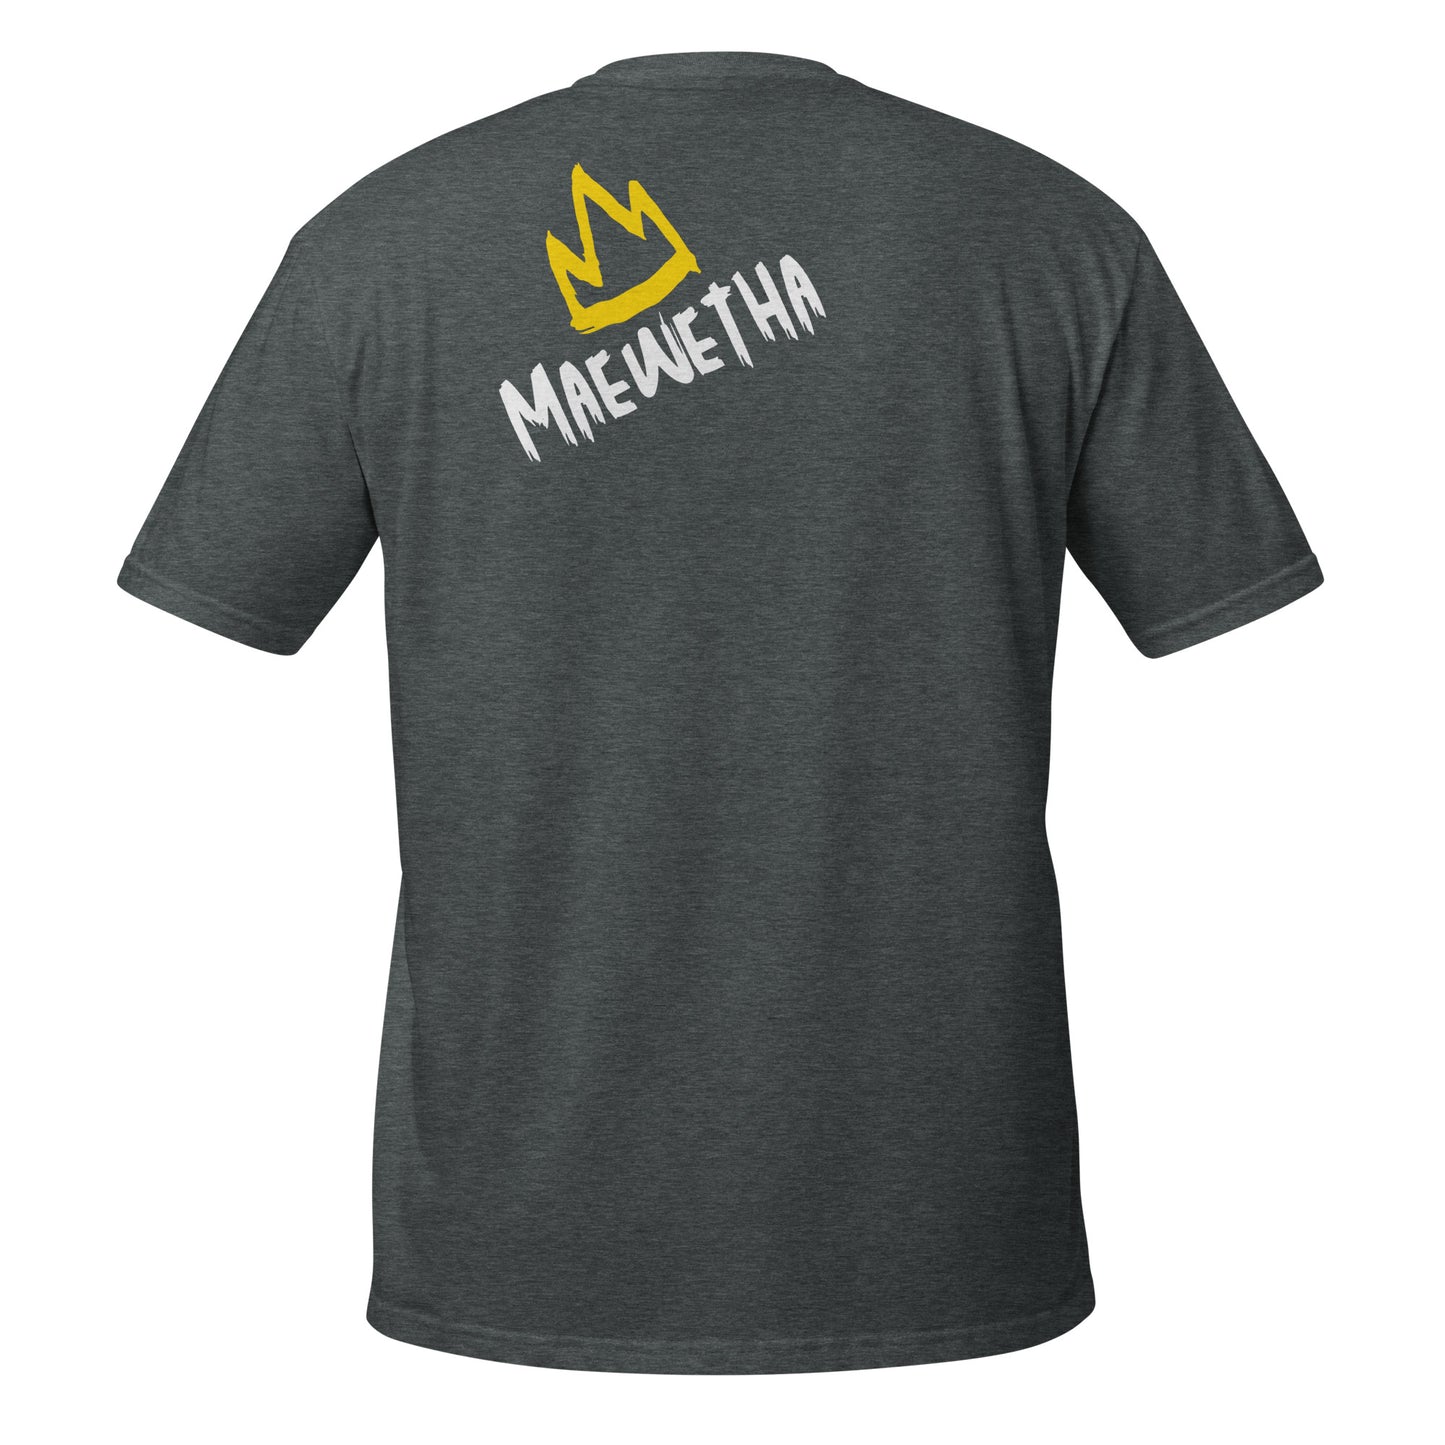 Maewetha T-Shirt